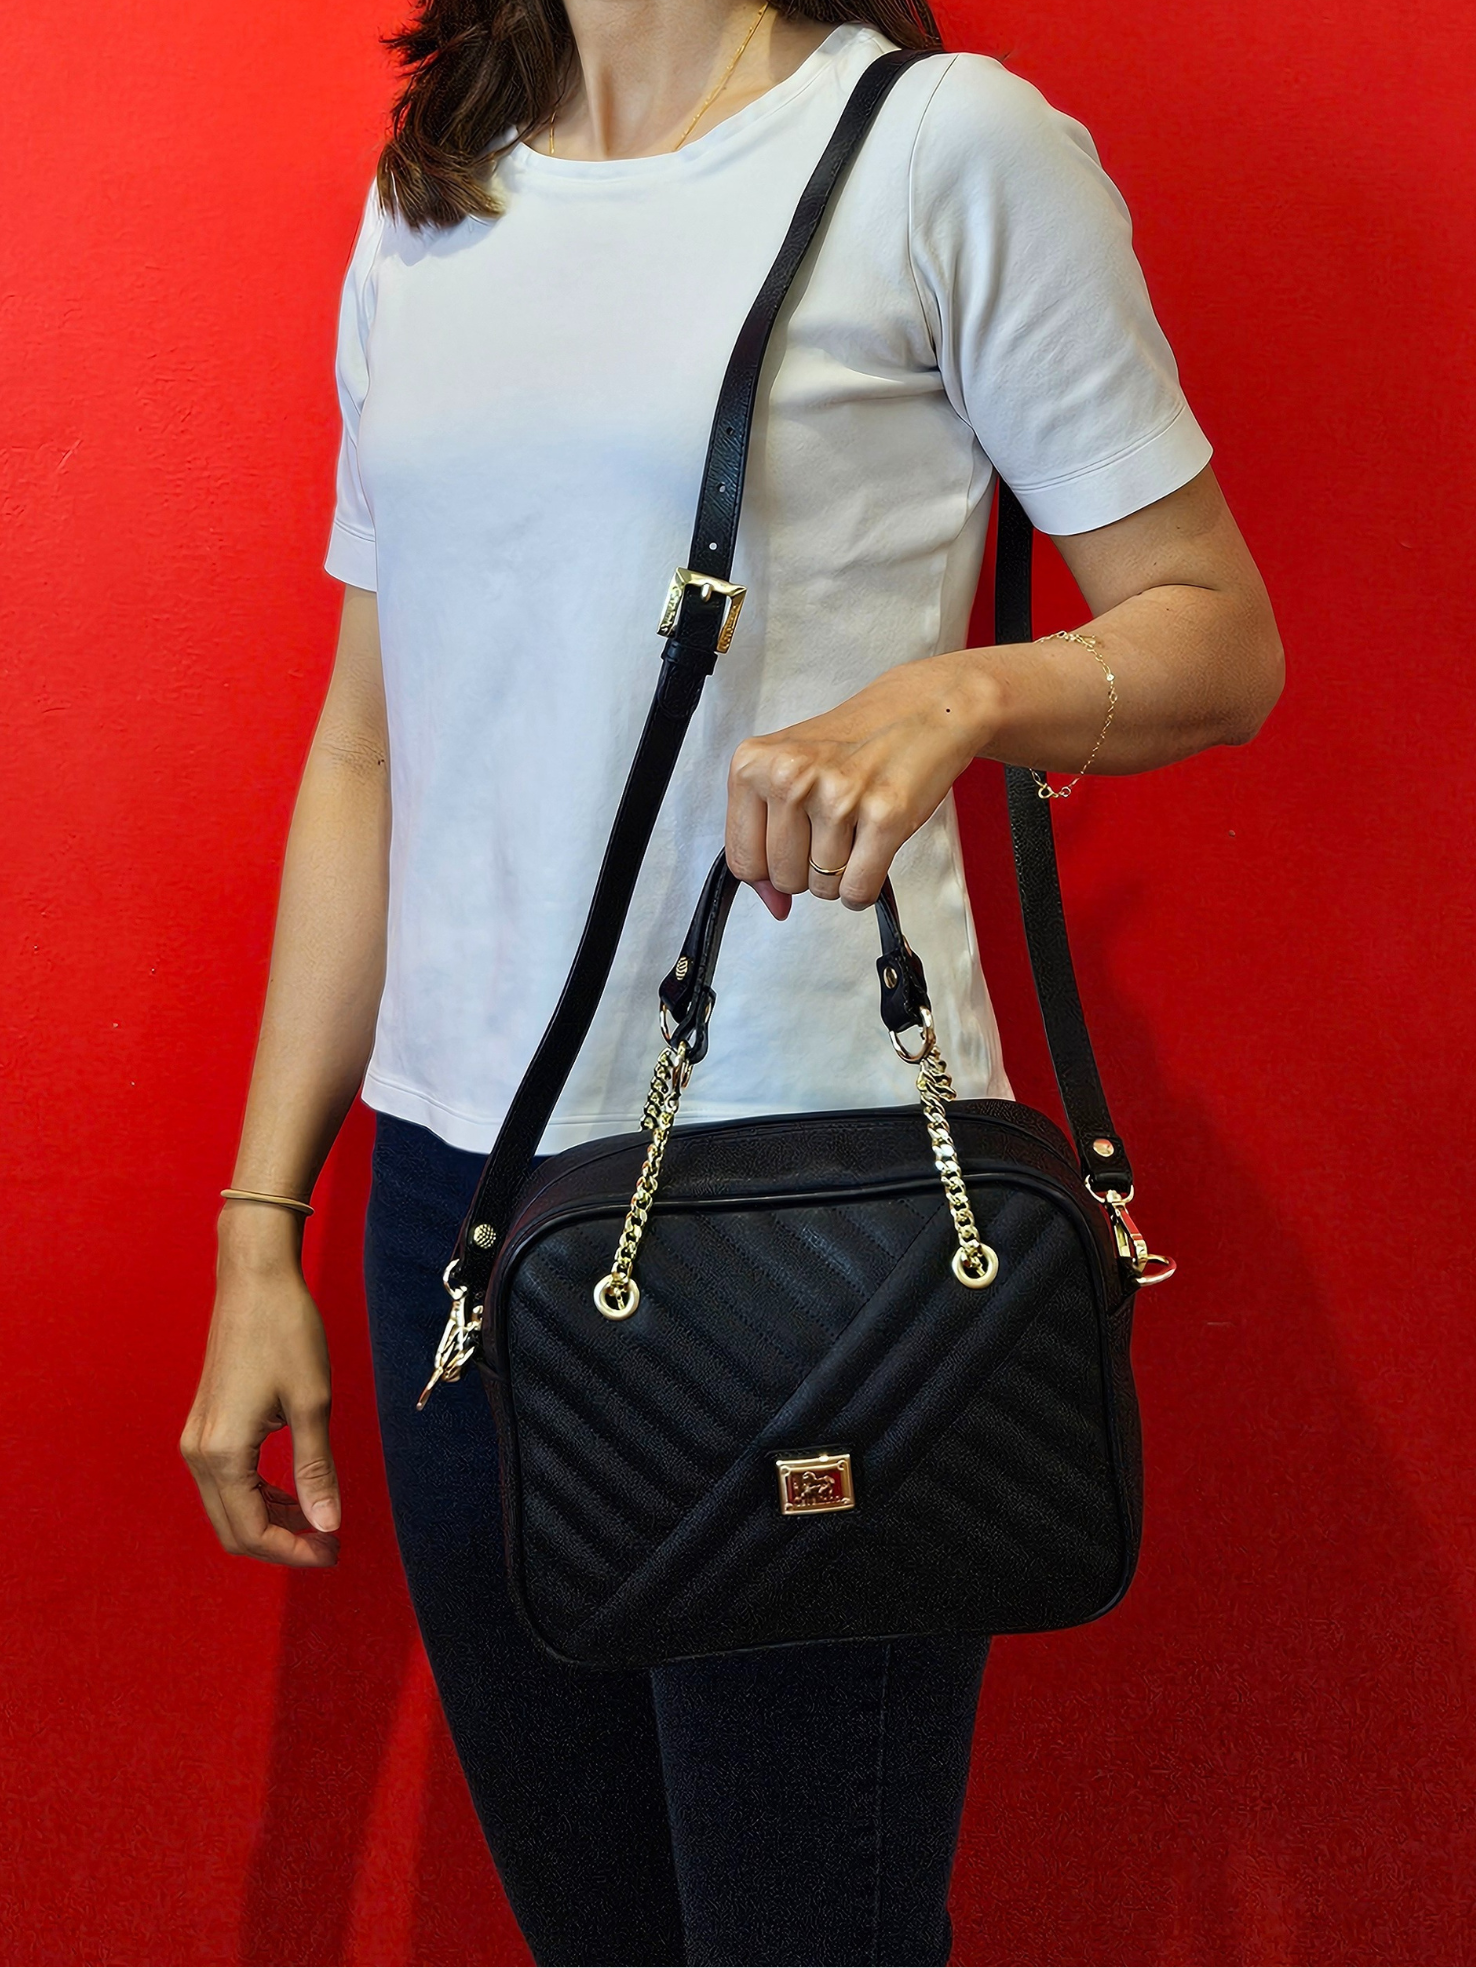 Cavalinho Charming Handbag SKU 18470512 #color_Navy, Black, Navy / Tan / Beige, white / sand